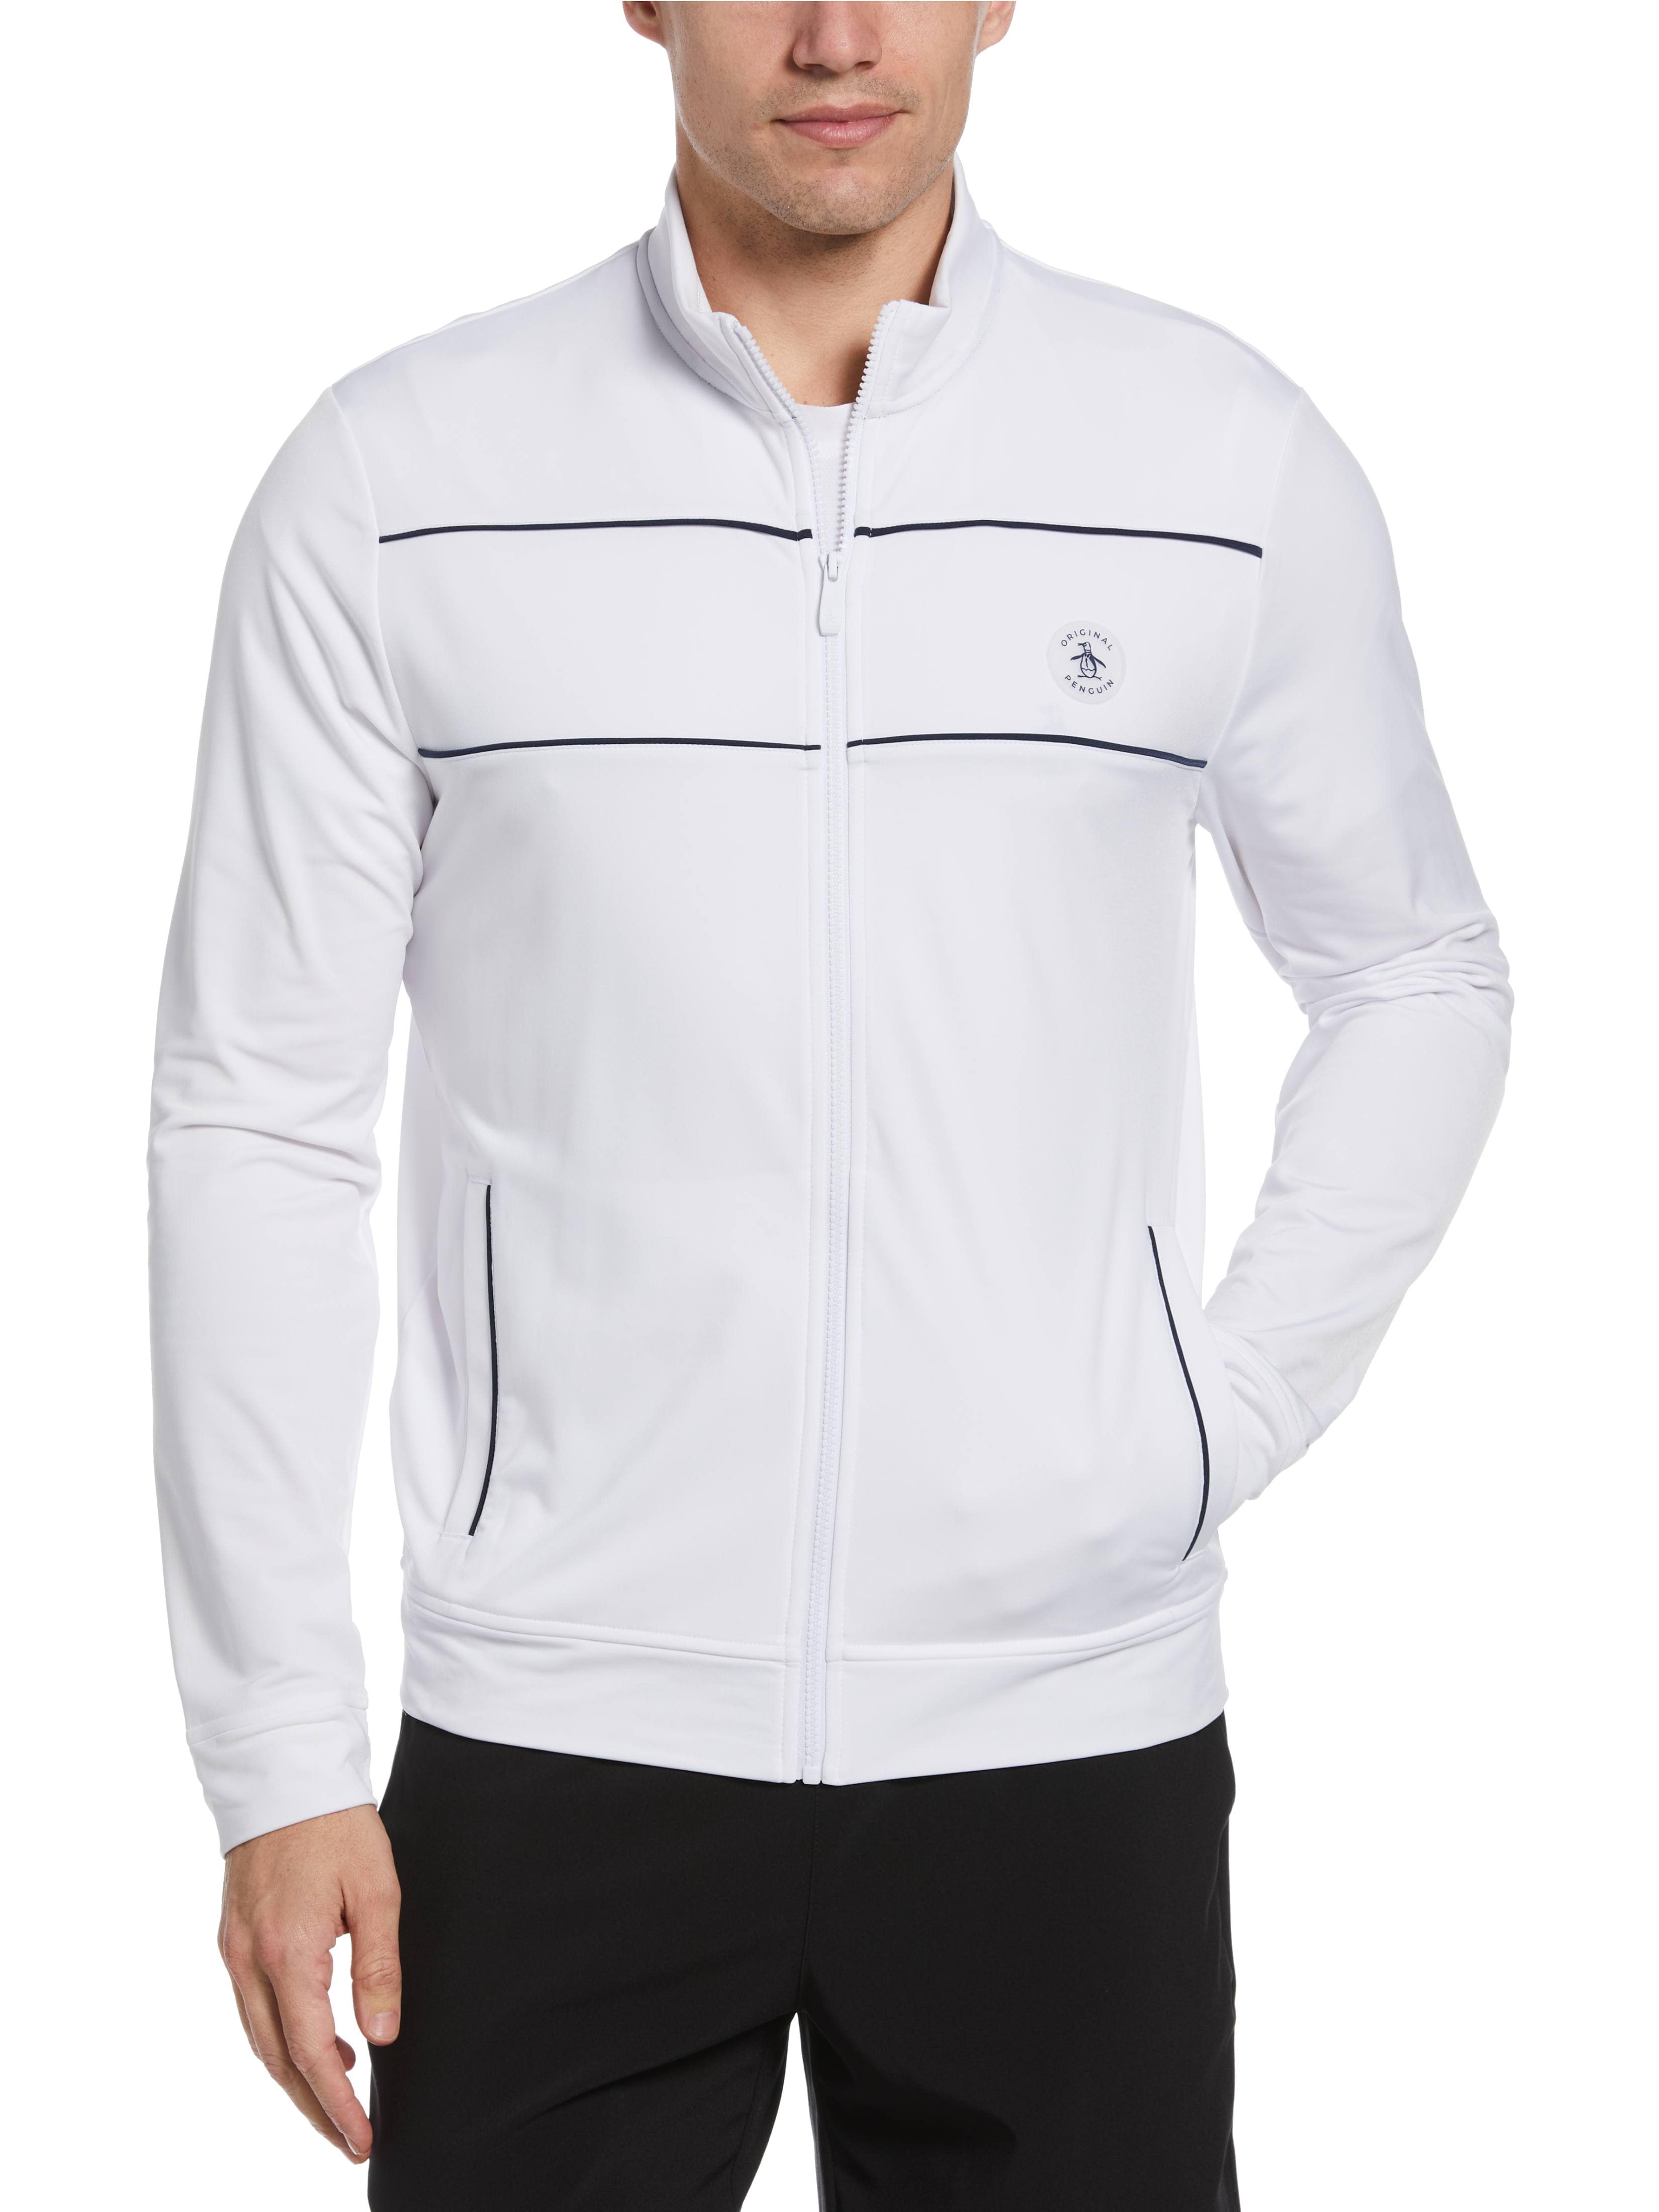 Original Penguin Mens Essential Tennis Track Jacket Top, Size XL, White, Polyester/Elastane | Golf Apparel Shop